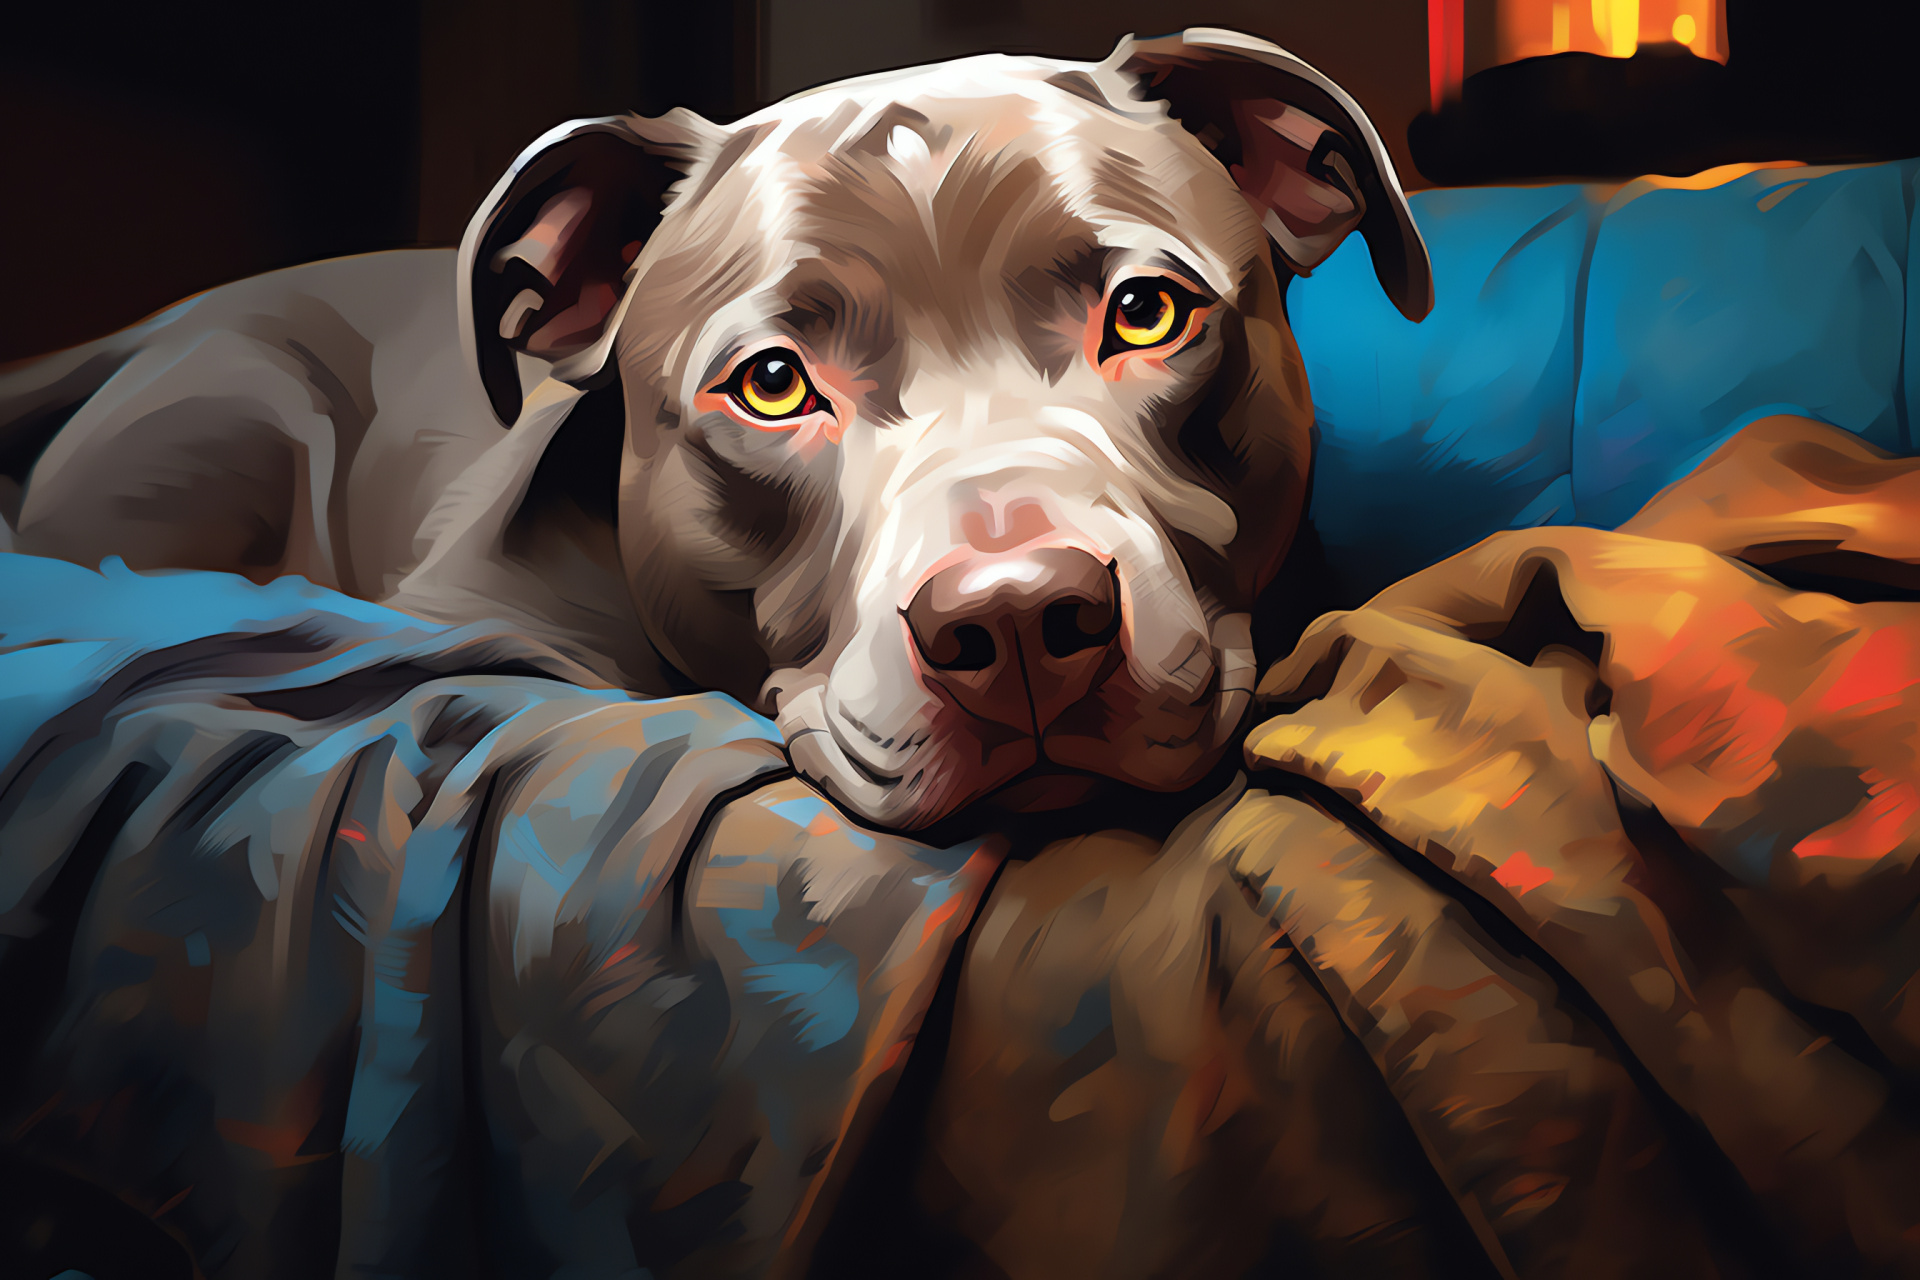 Domestic Pitbull pet, Companion animal, Canine loyalty, Home environment, Leisure time, HD Desktop Wallpaper